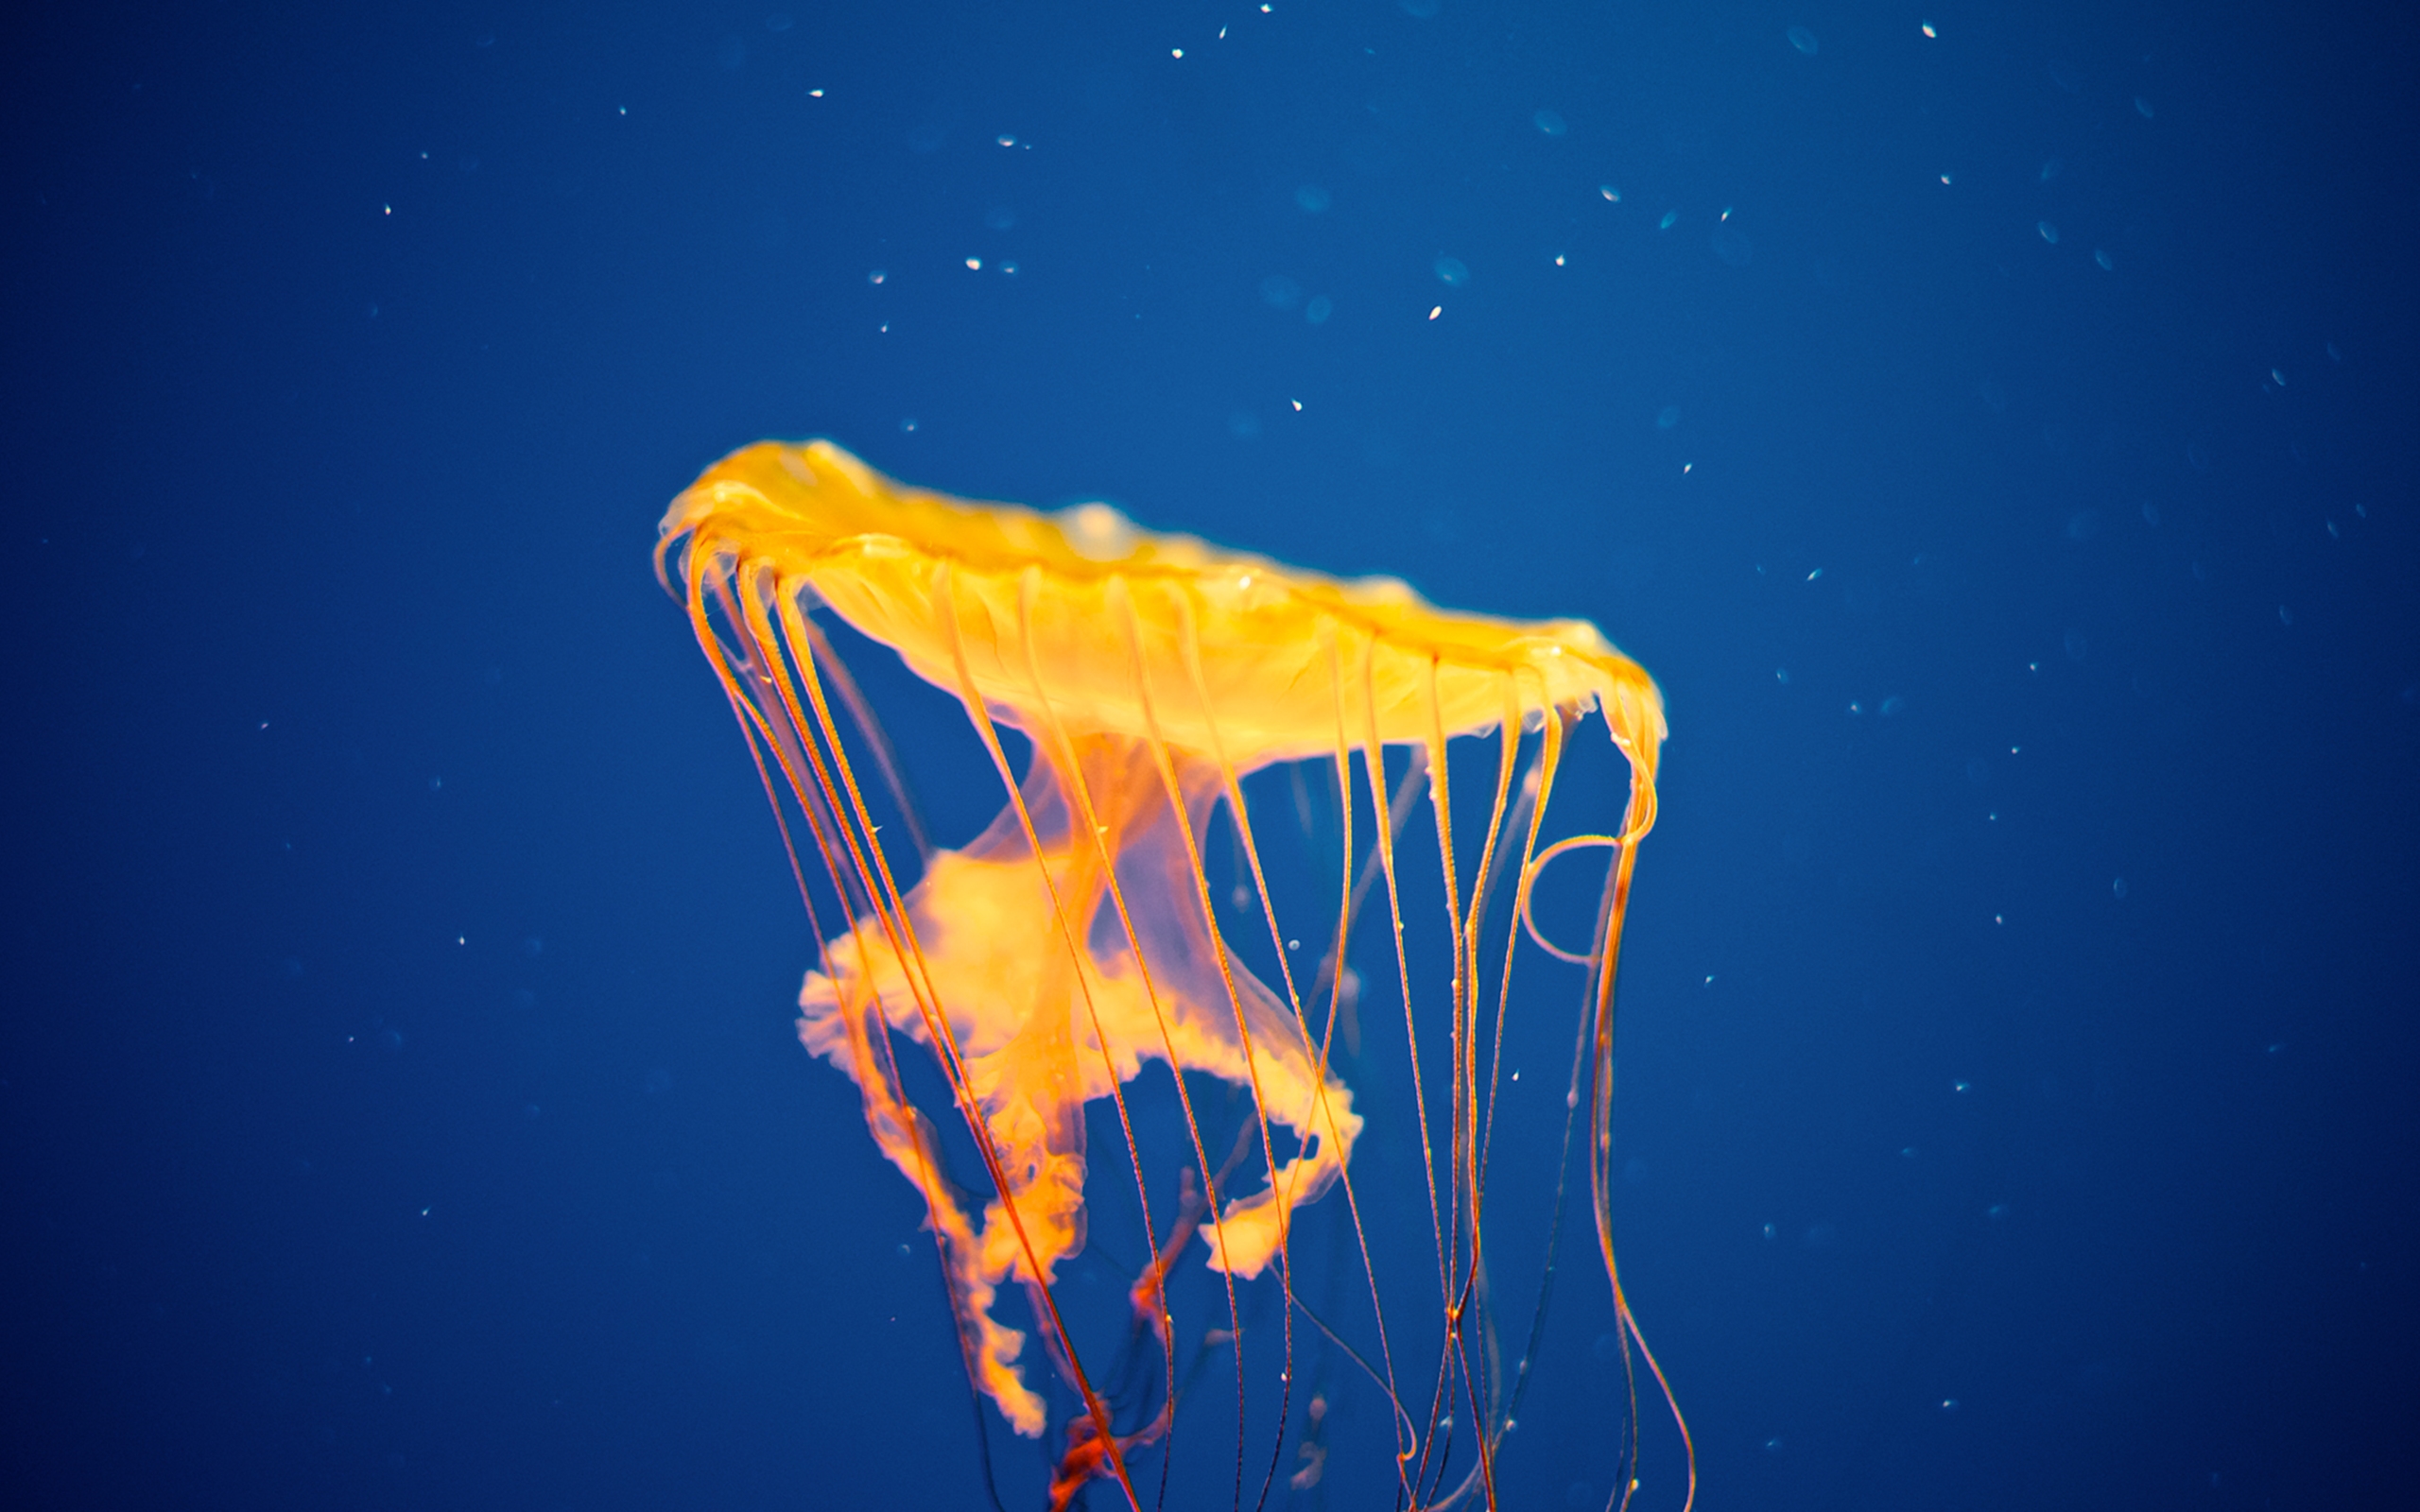 Jellyfish Invasion by RFoster